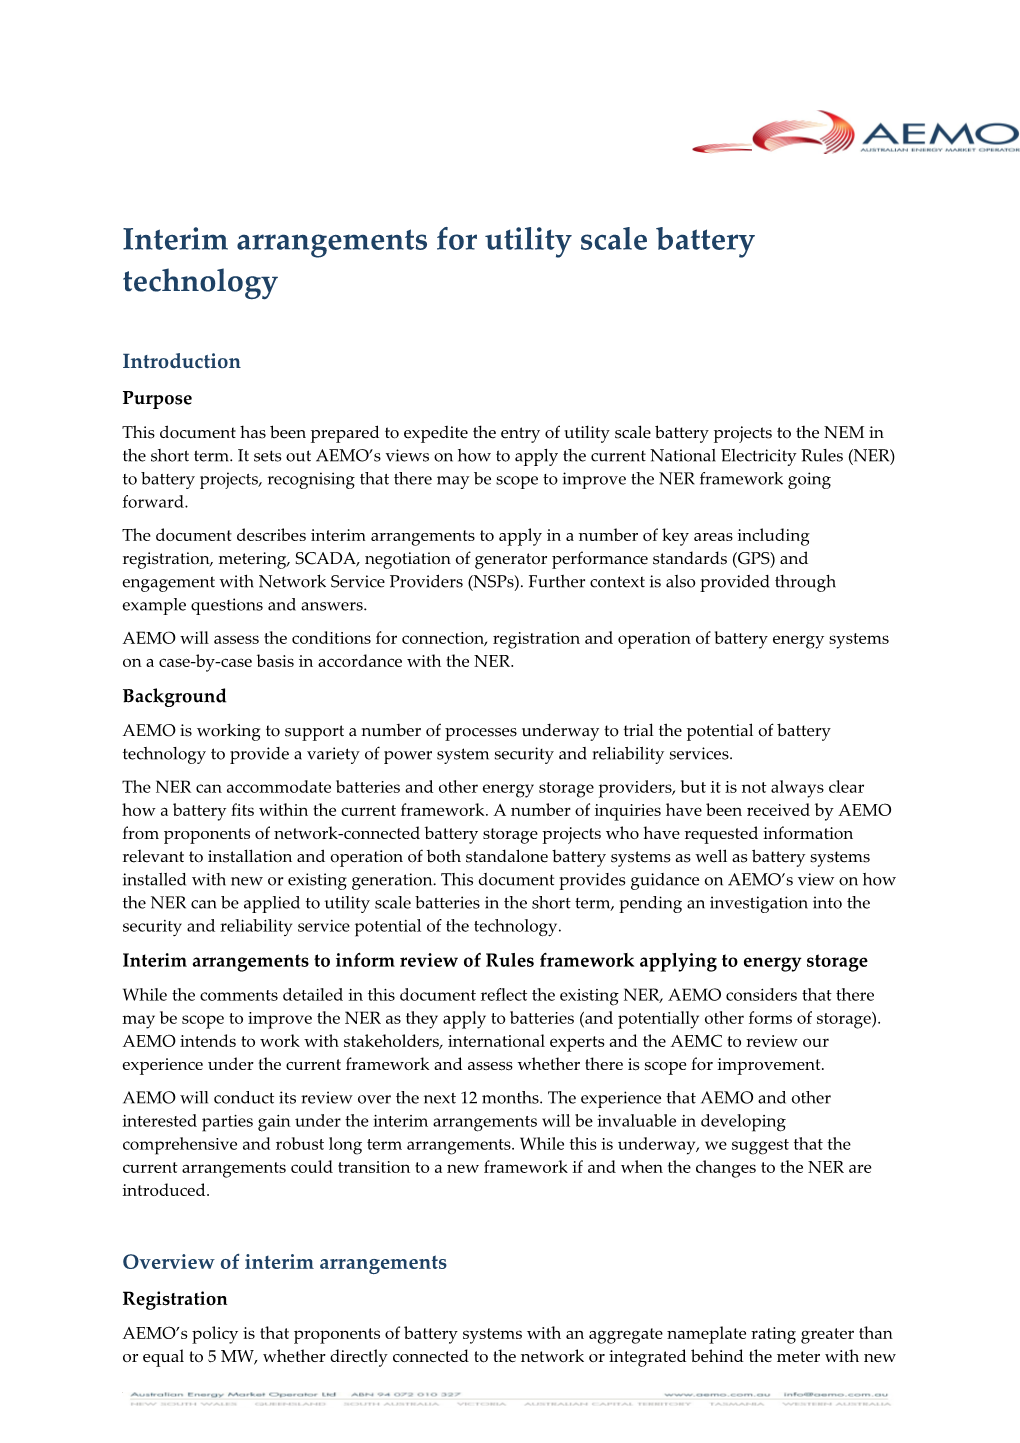 Interim Arrangements for Utility Scale Battery Technology